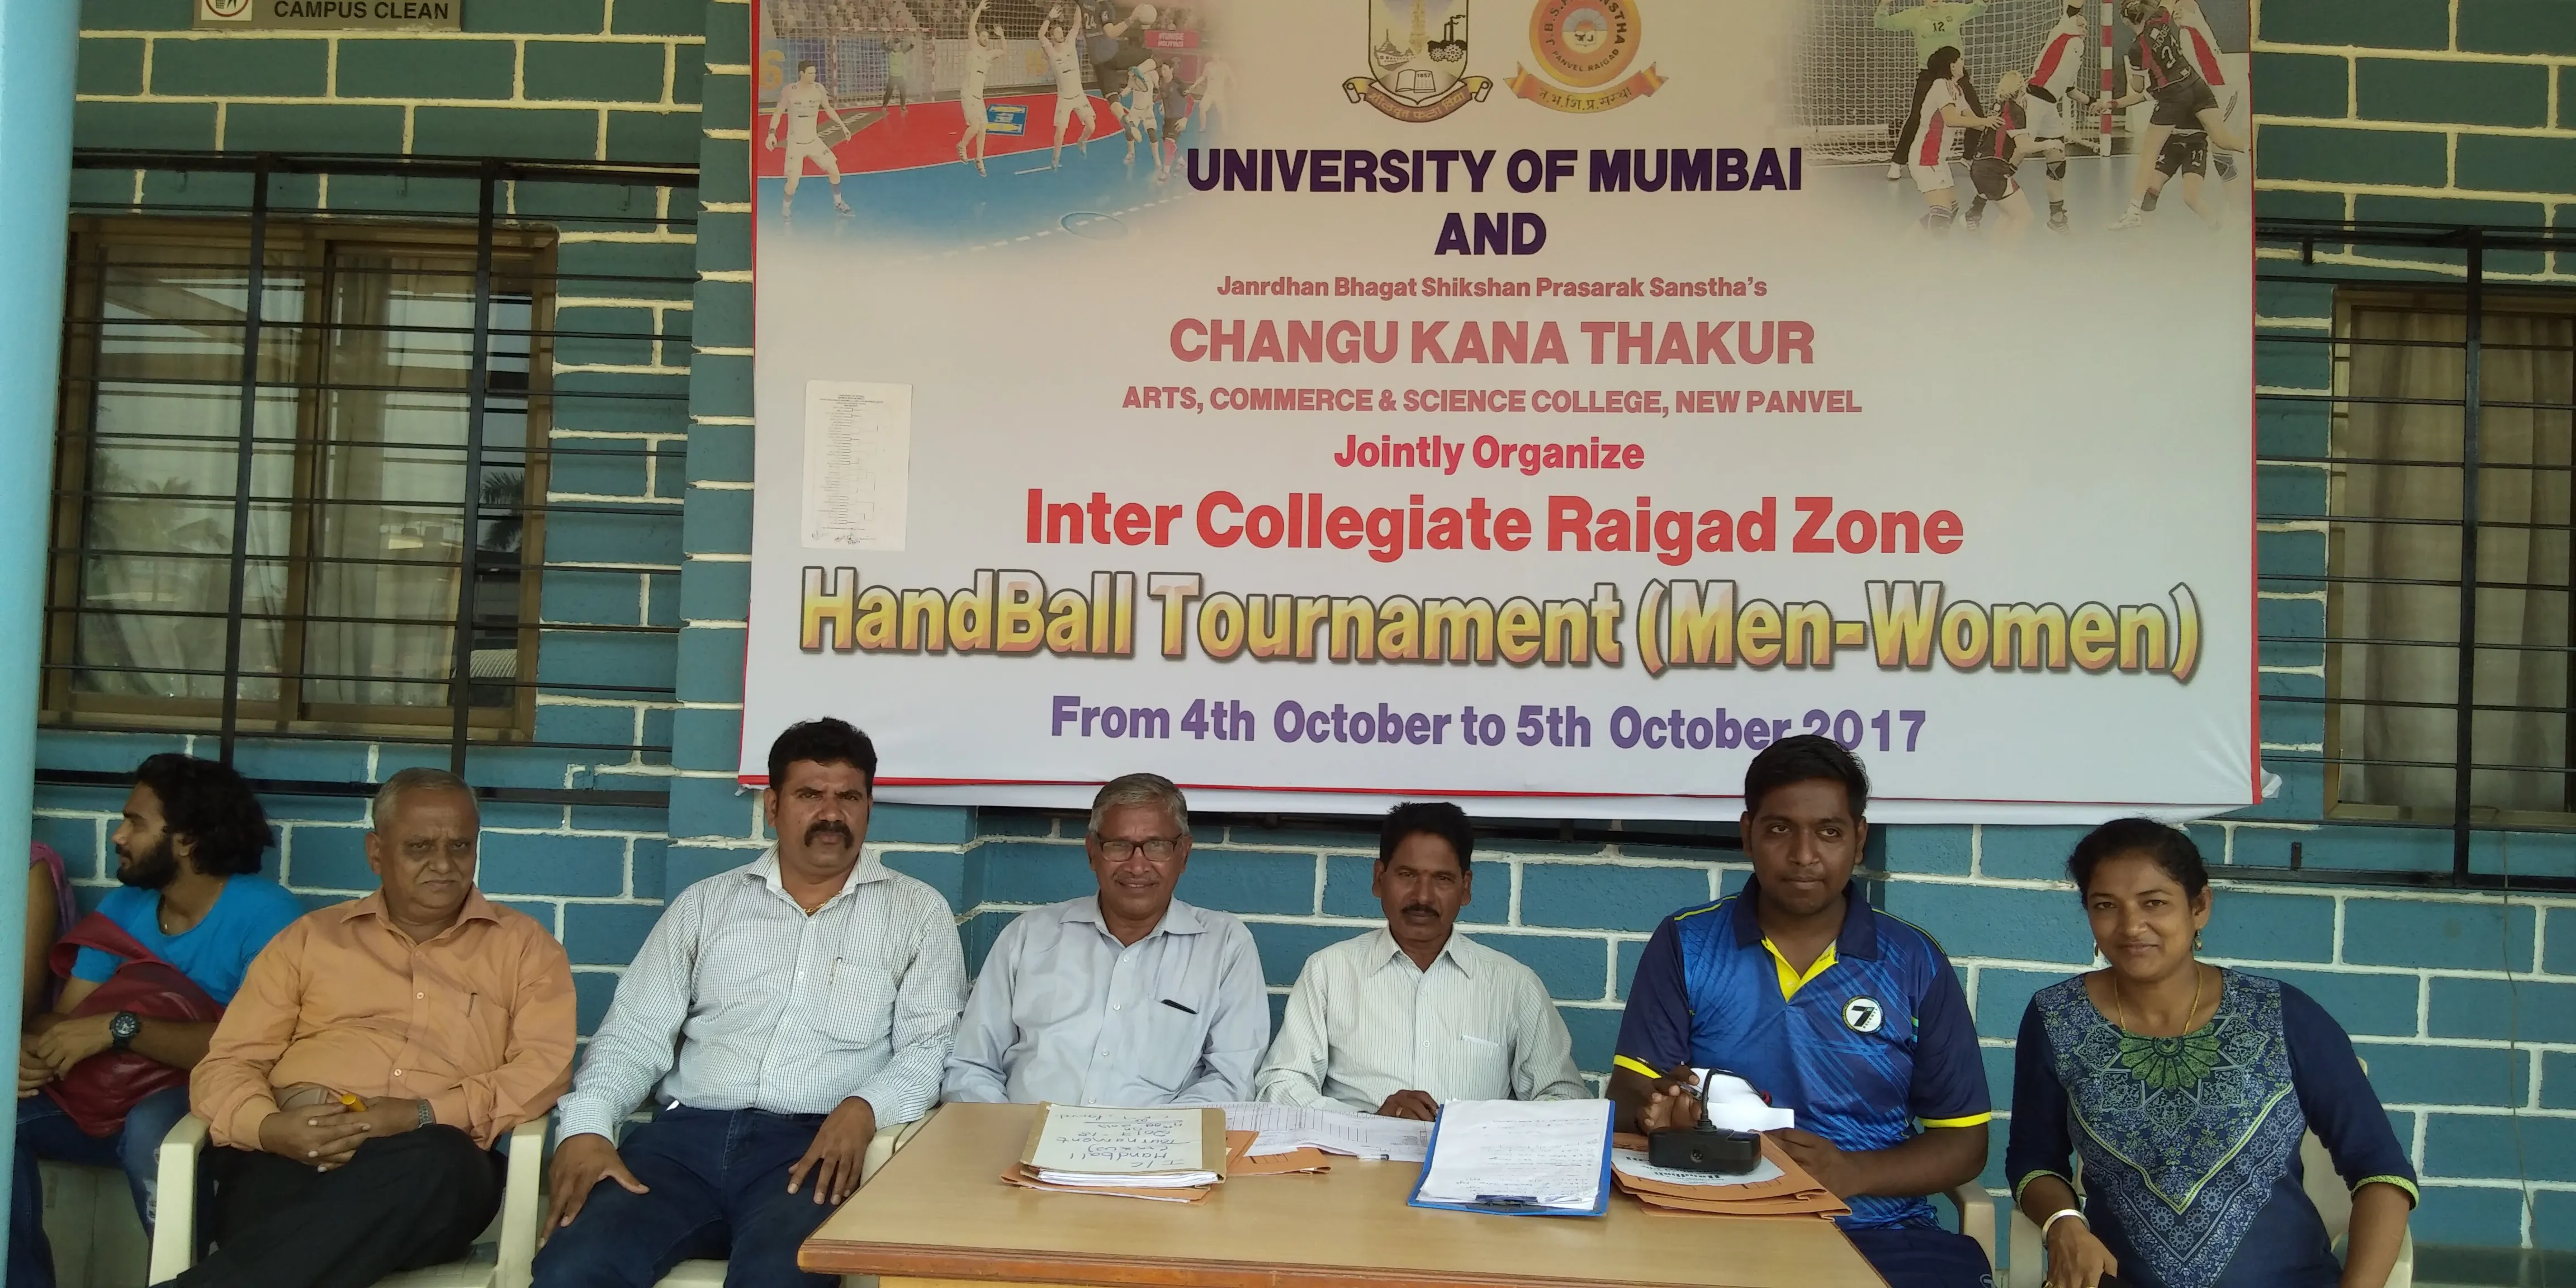 Organization of Intercollegiate Handboll Tournament 2017-18